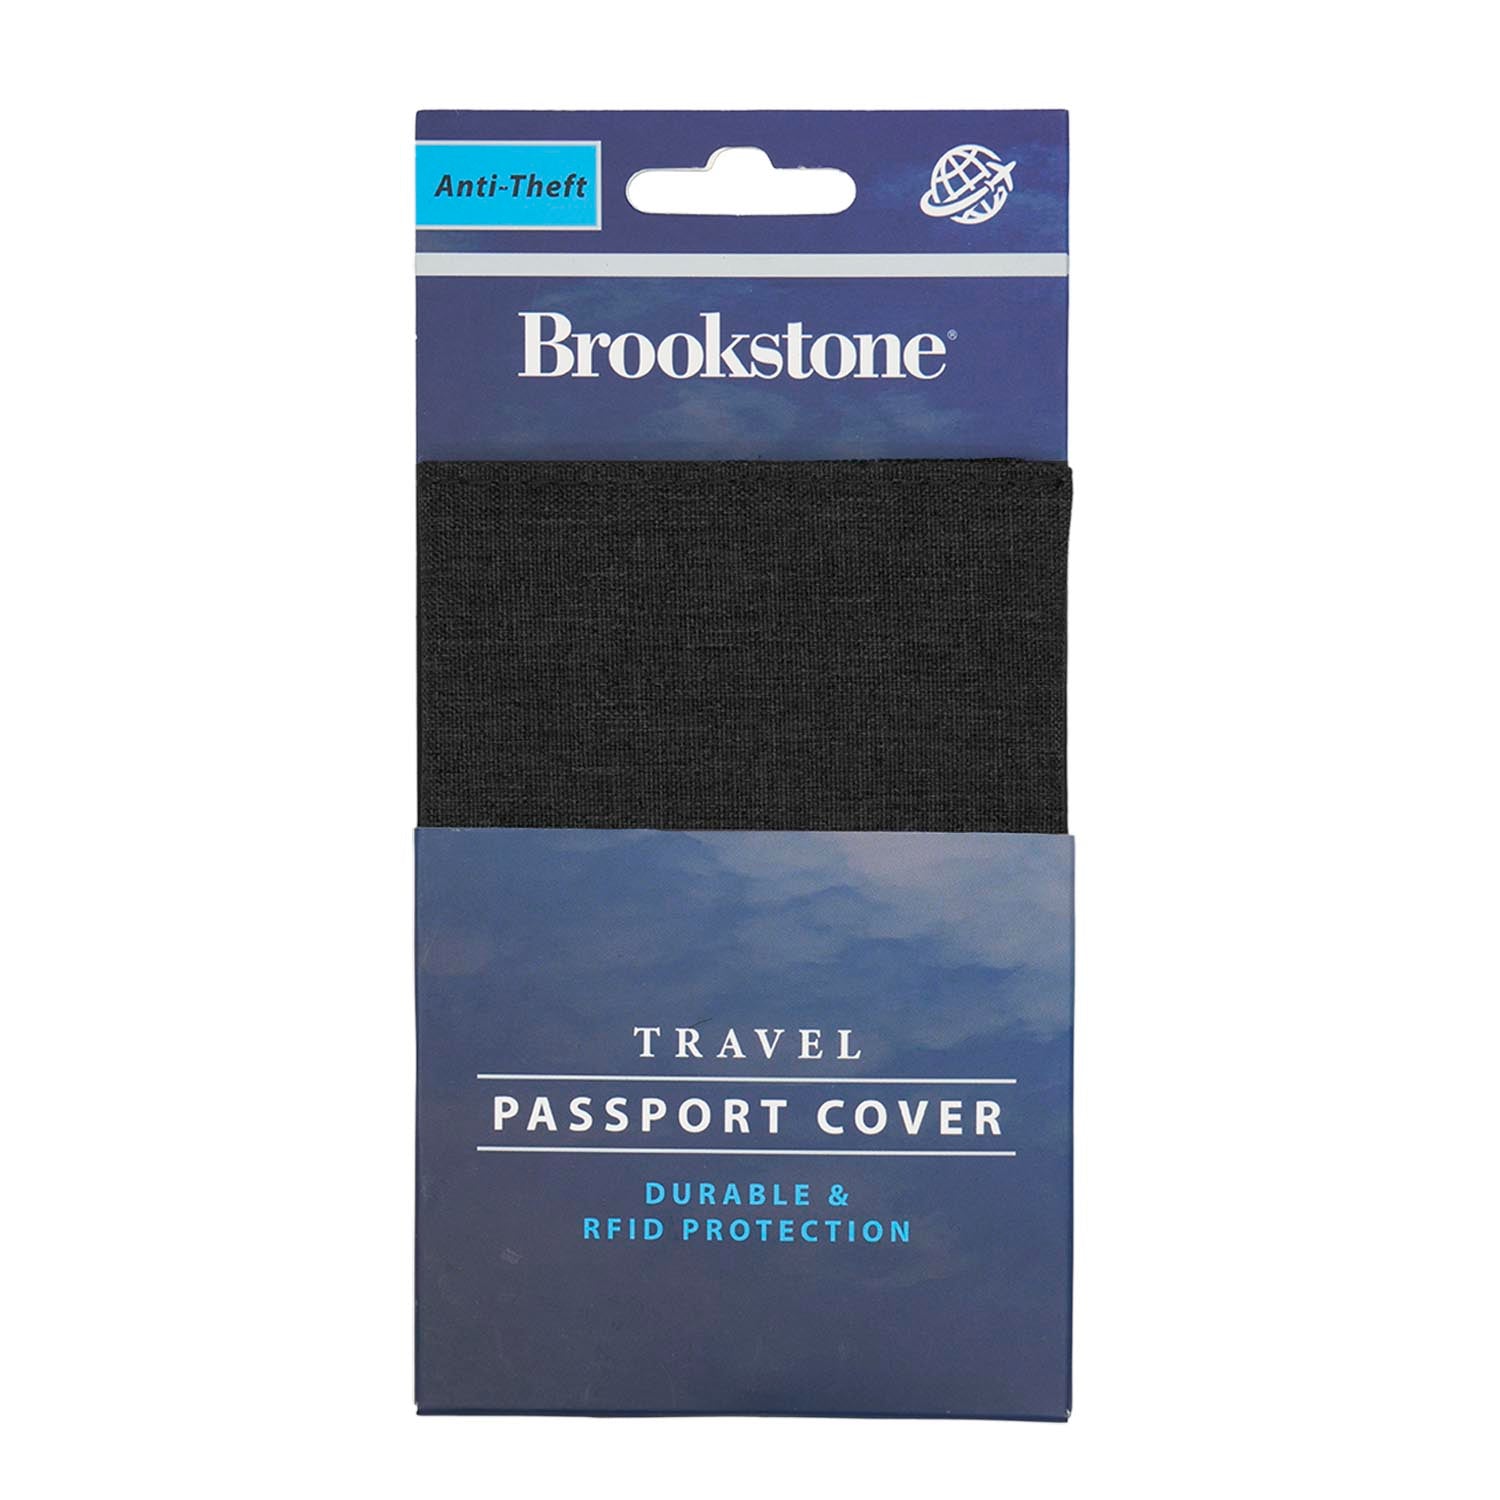 Brookstone Travel Passport Cover